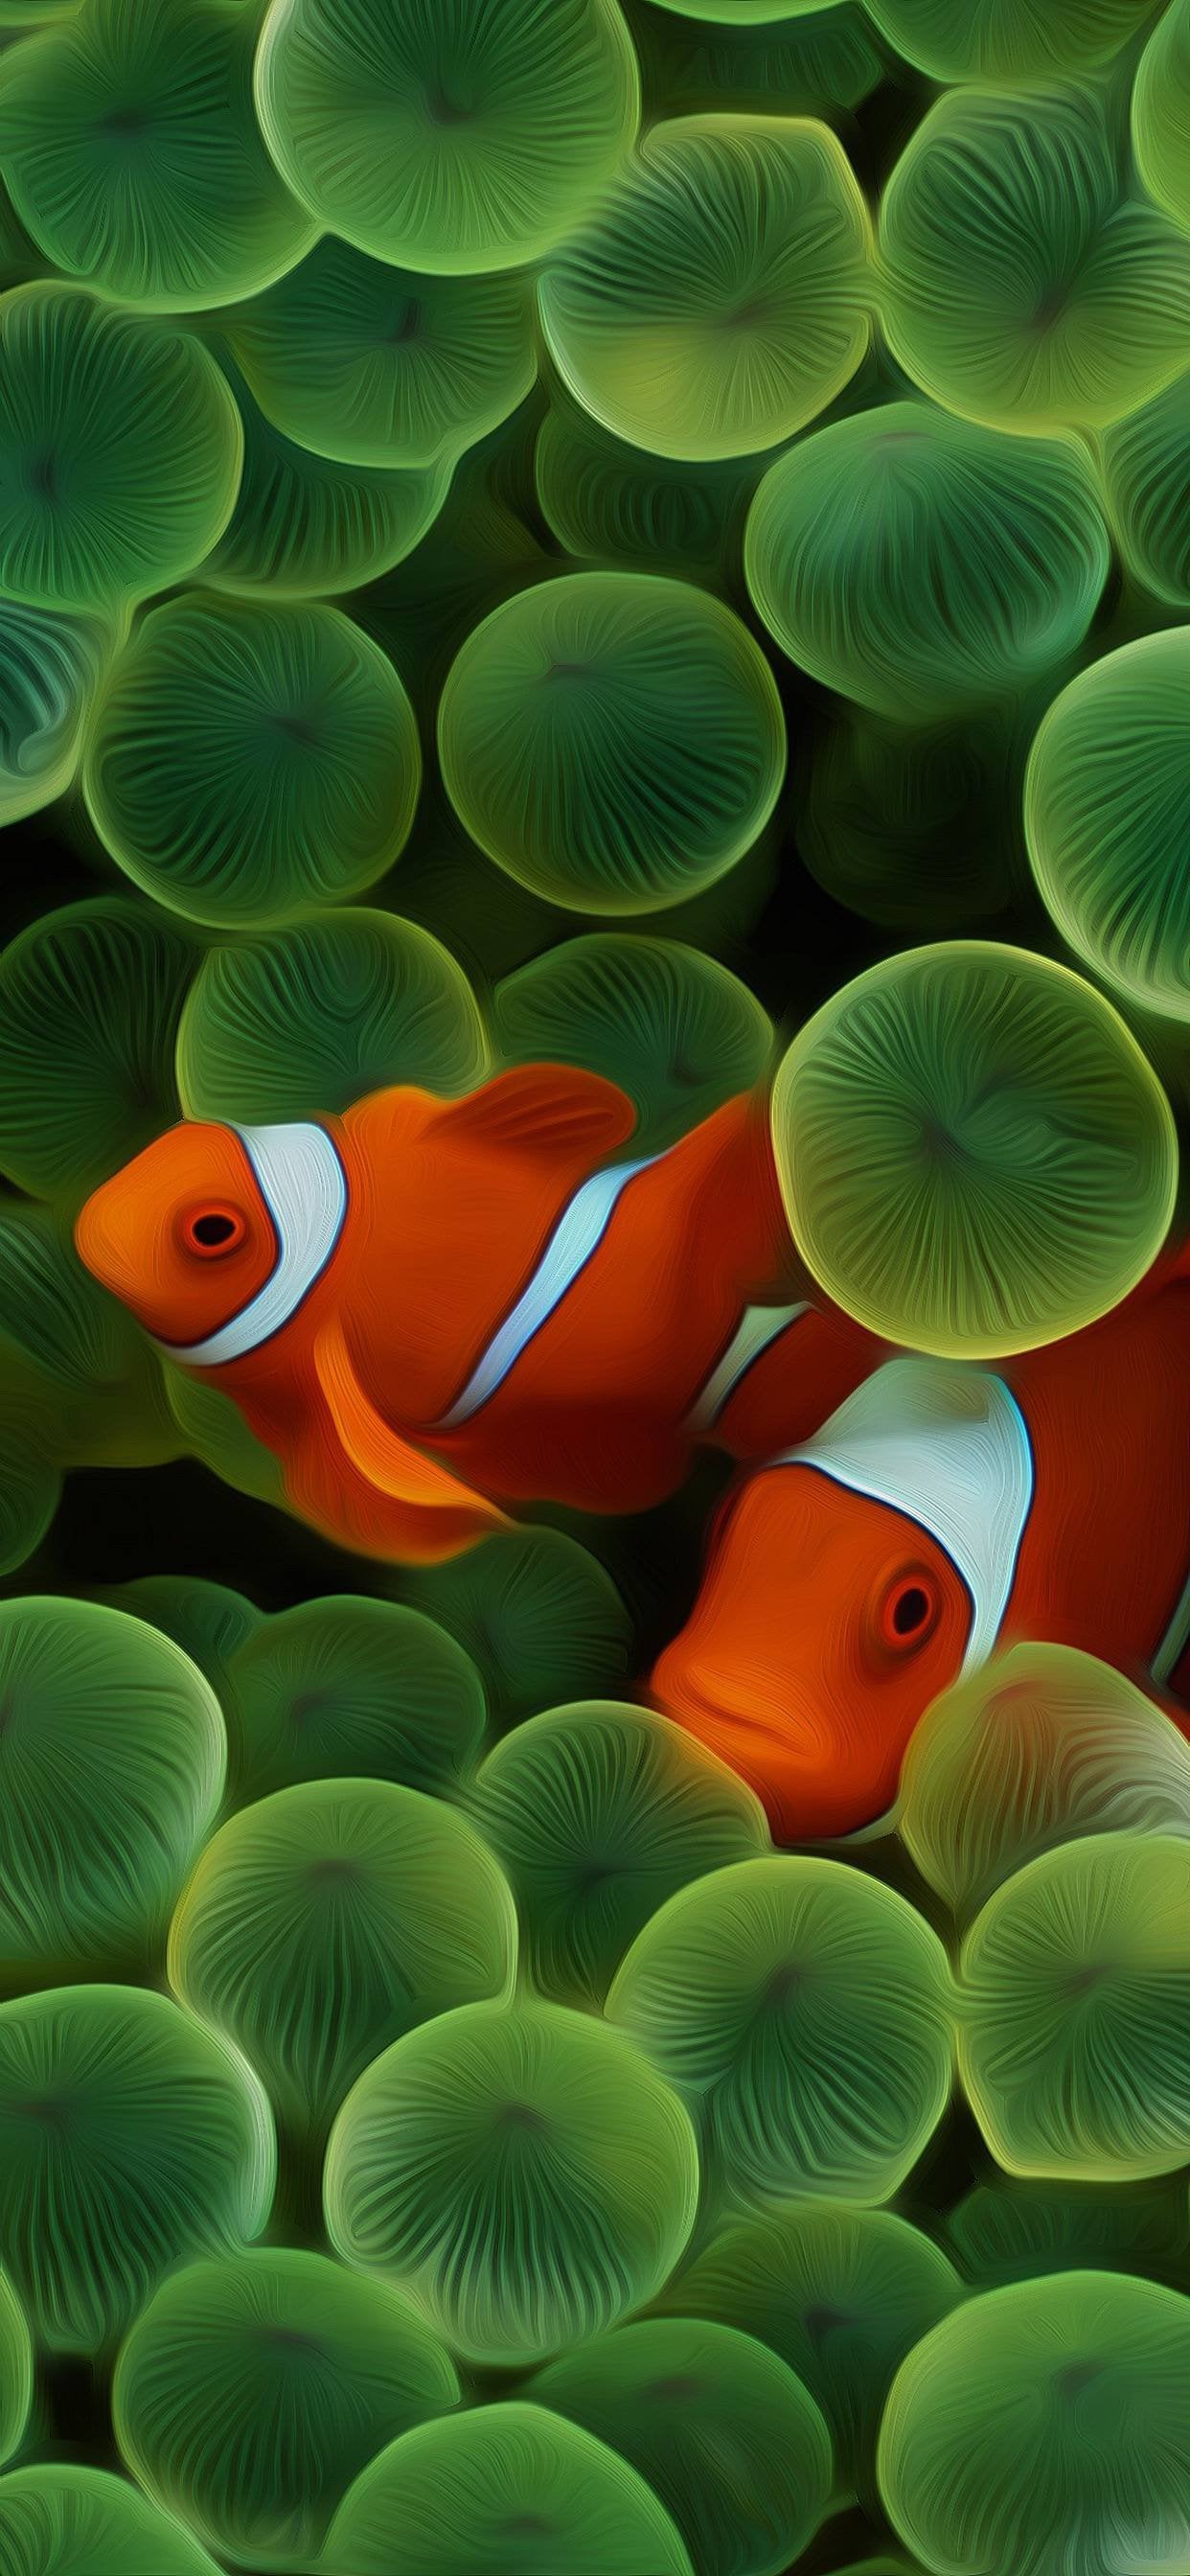 iPhone 2G clown fish wallpaper